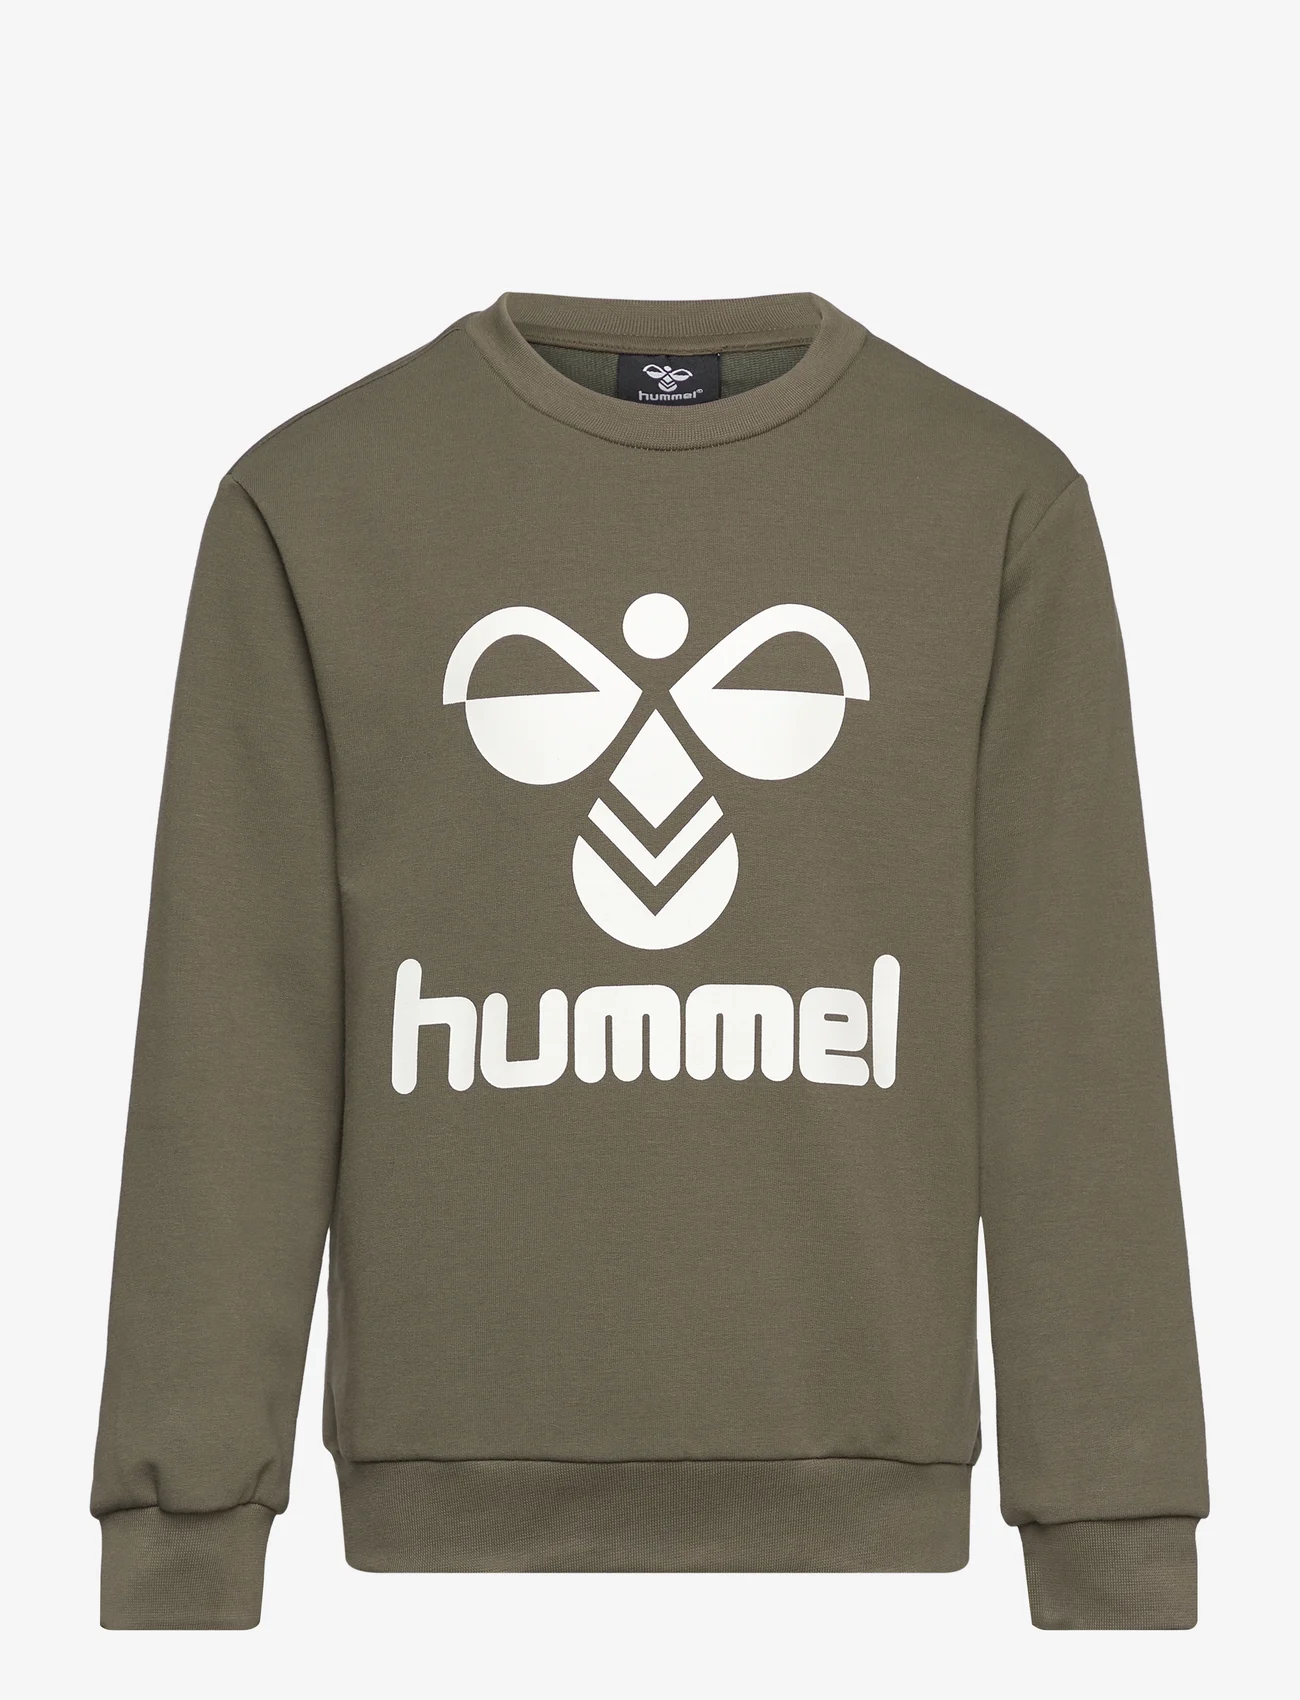 Hummel - hmlDOS SWEATSHIRT - sweatshirts & hoodies - olive night - 0